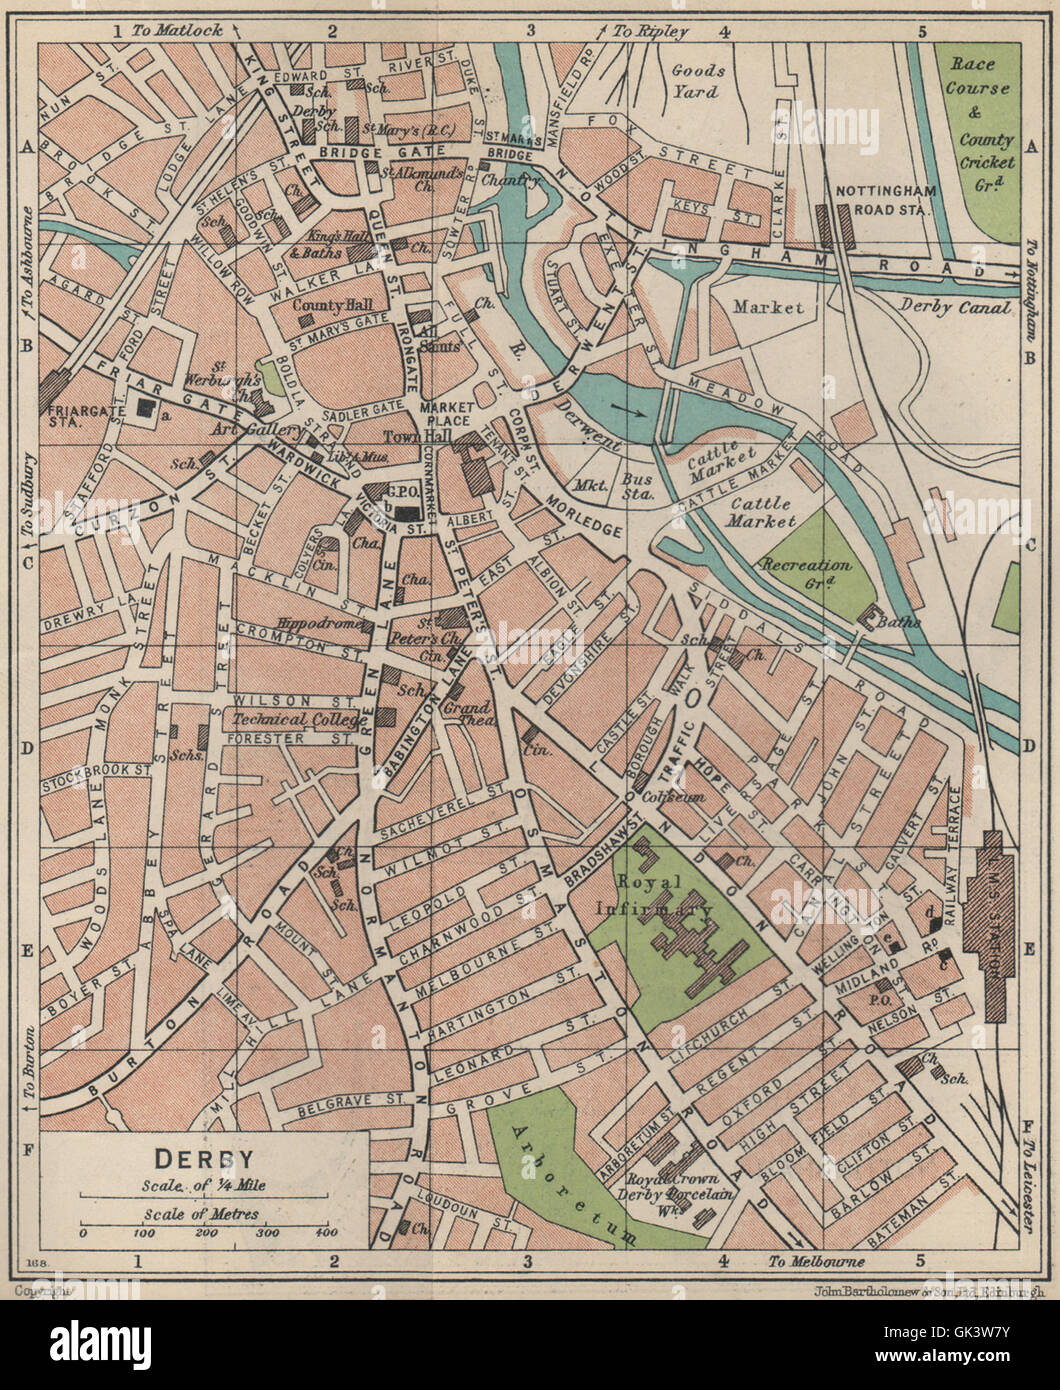 Derby Vintage Town City Map Plan England 1939 GK3W7Y 